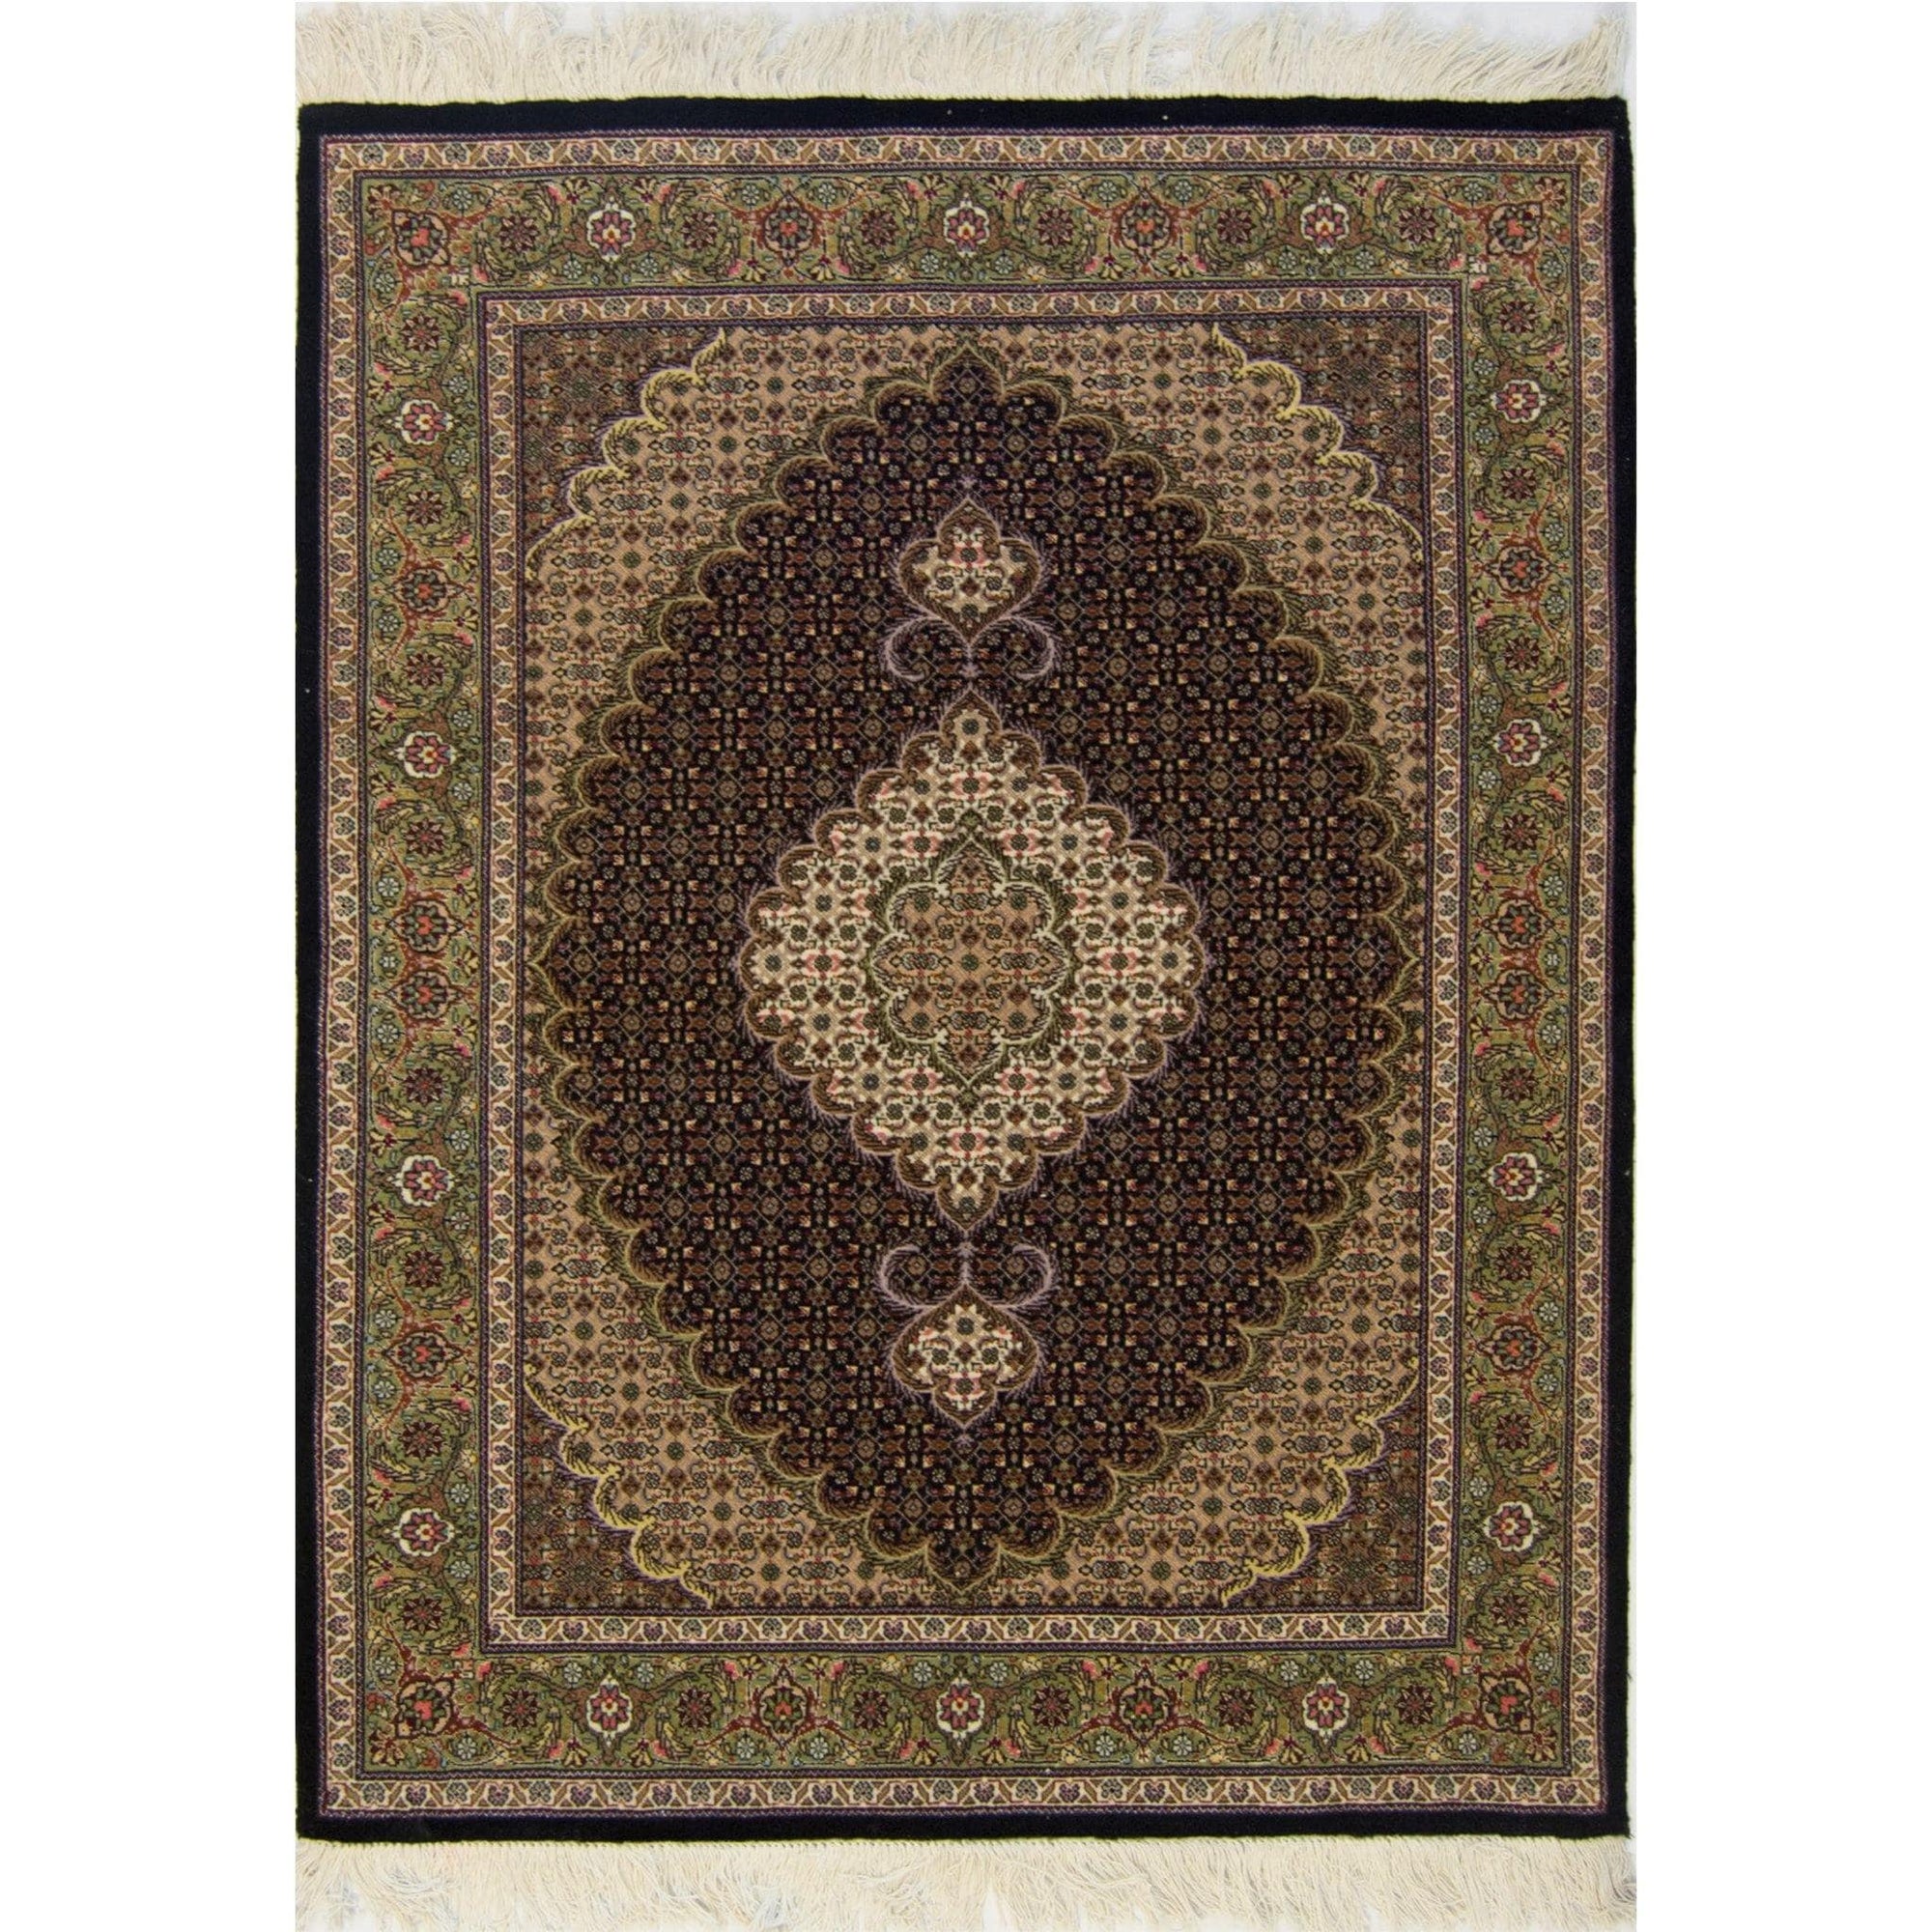 Super Fine Persian Wool and Silk Tabriz - Mahi Rug 107 cm x 157 cm